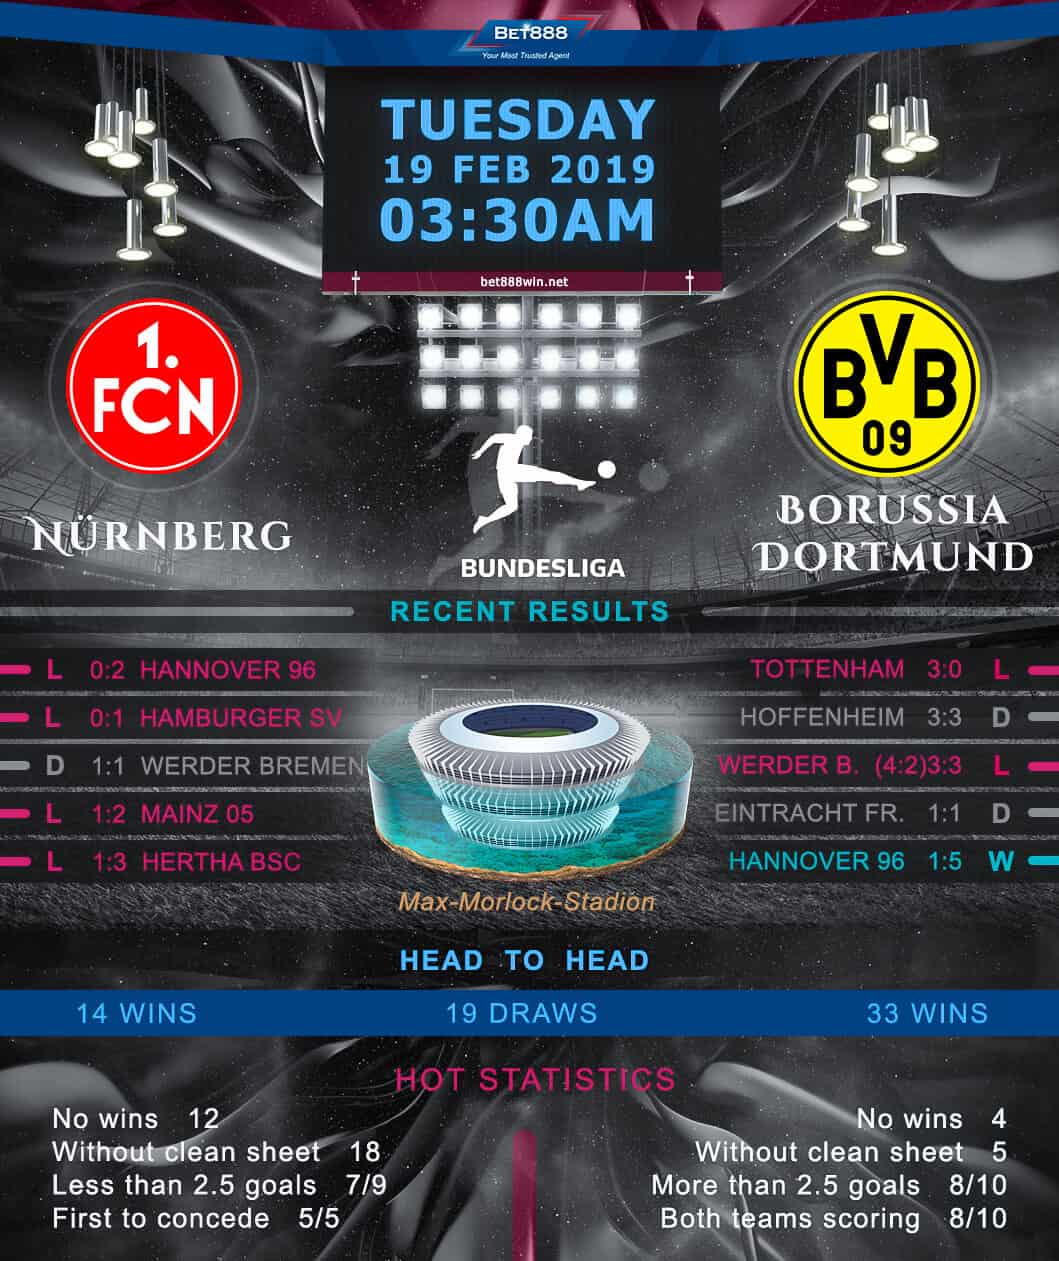 Nurnberg vs Borussia Dortmund 19/02/19